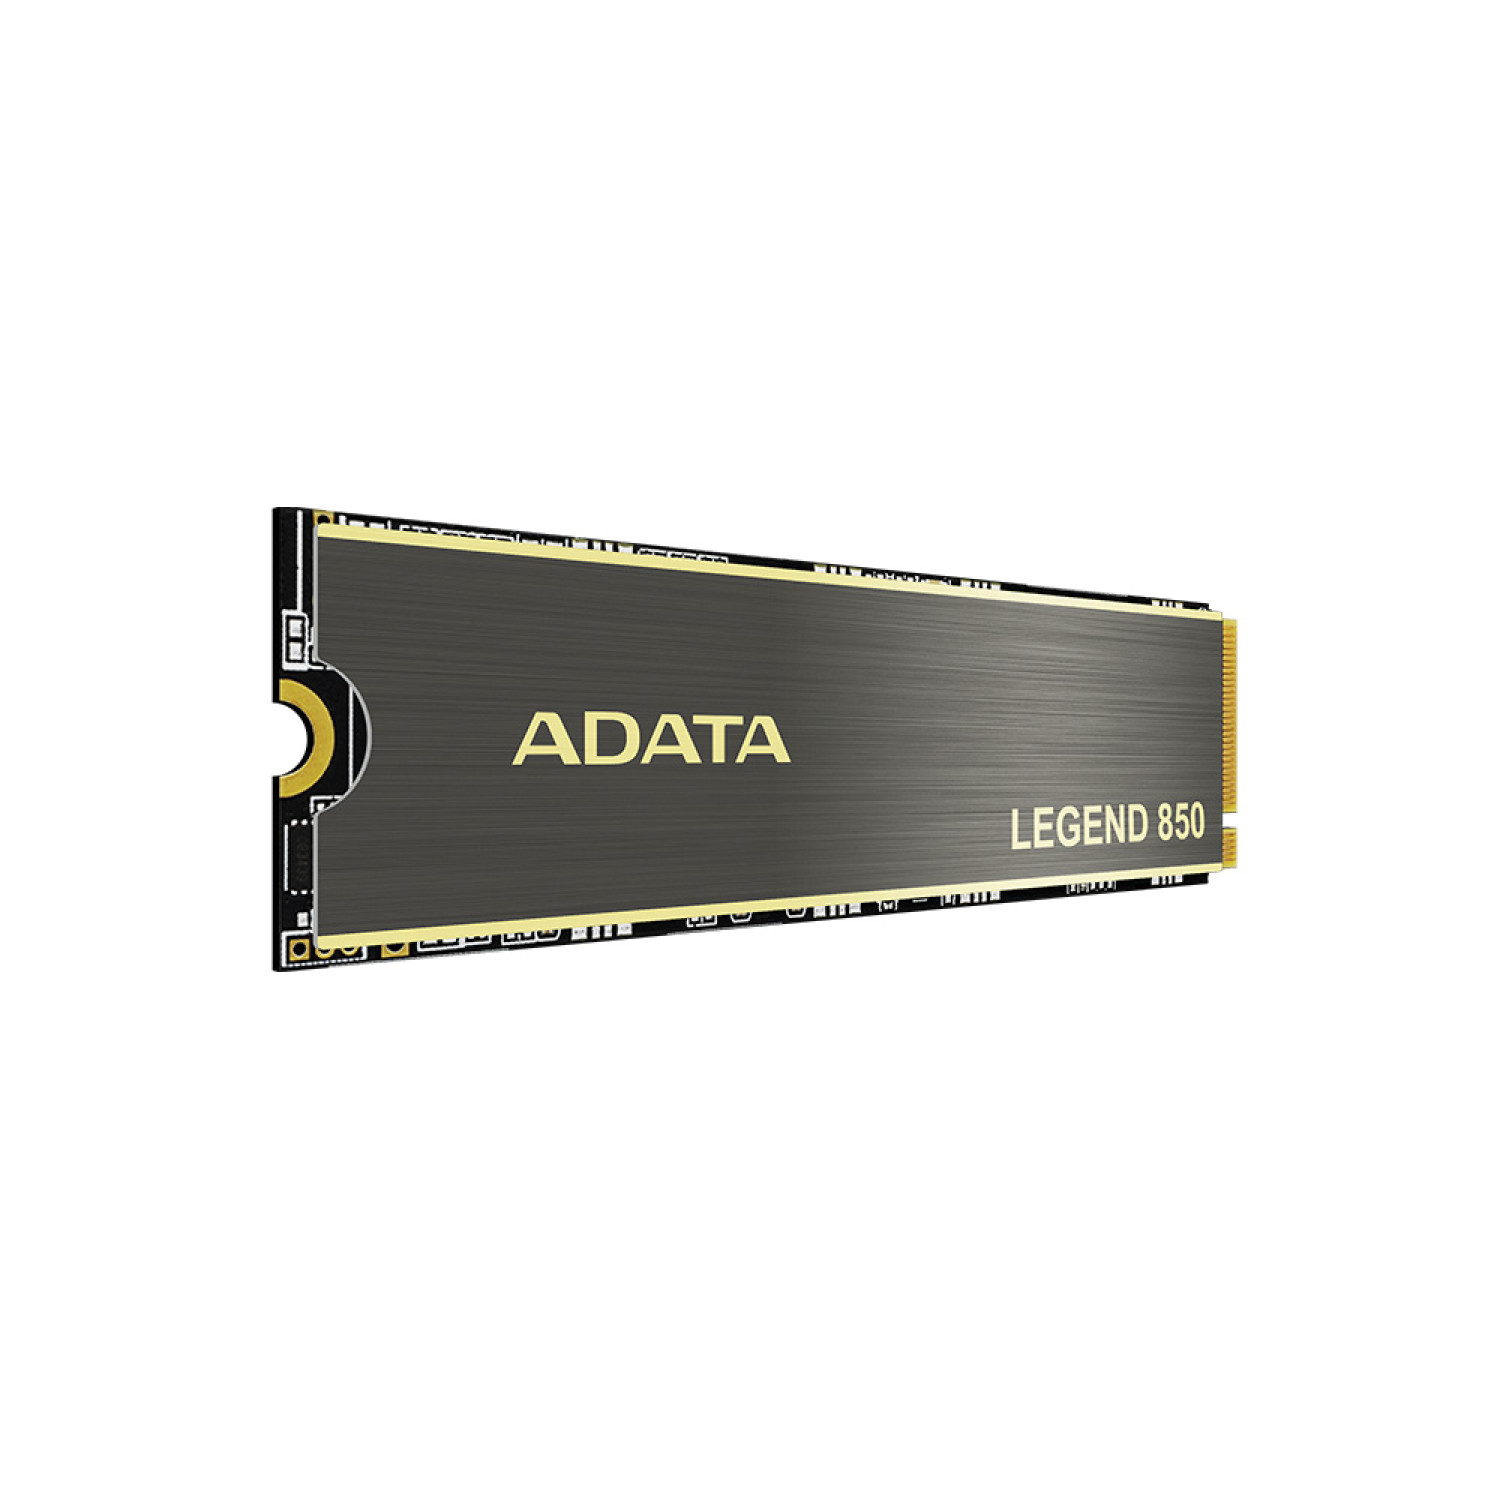 حافظه اس اس دی ADATA Legend 850 512GB - for PS5-3